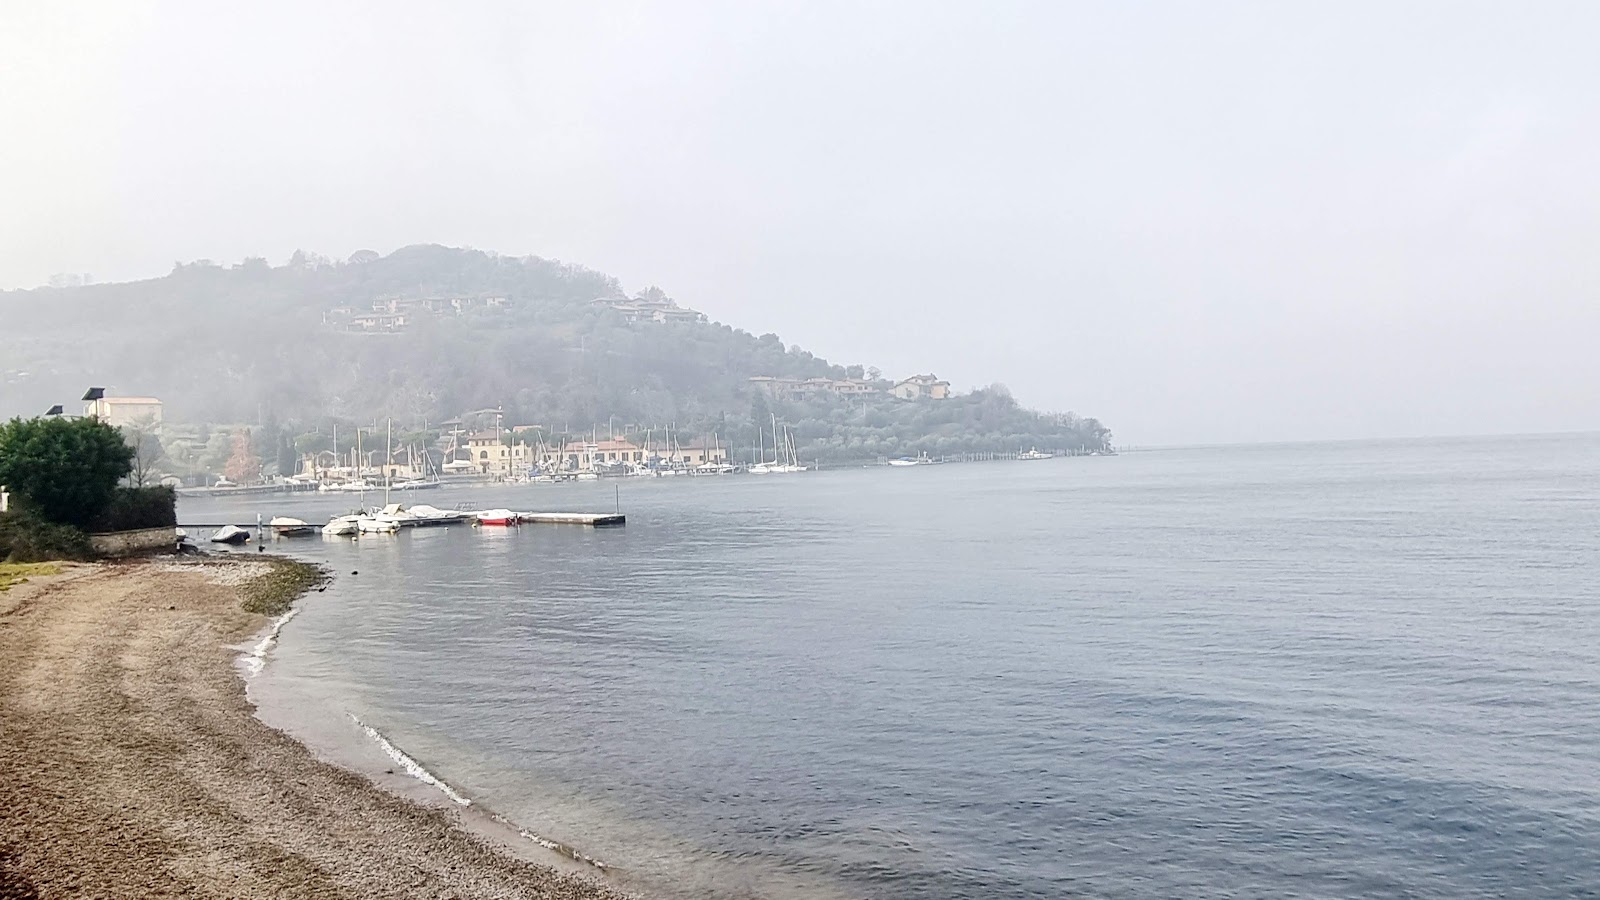 Photo of Spiaggia Sulzano and the settlement